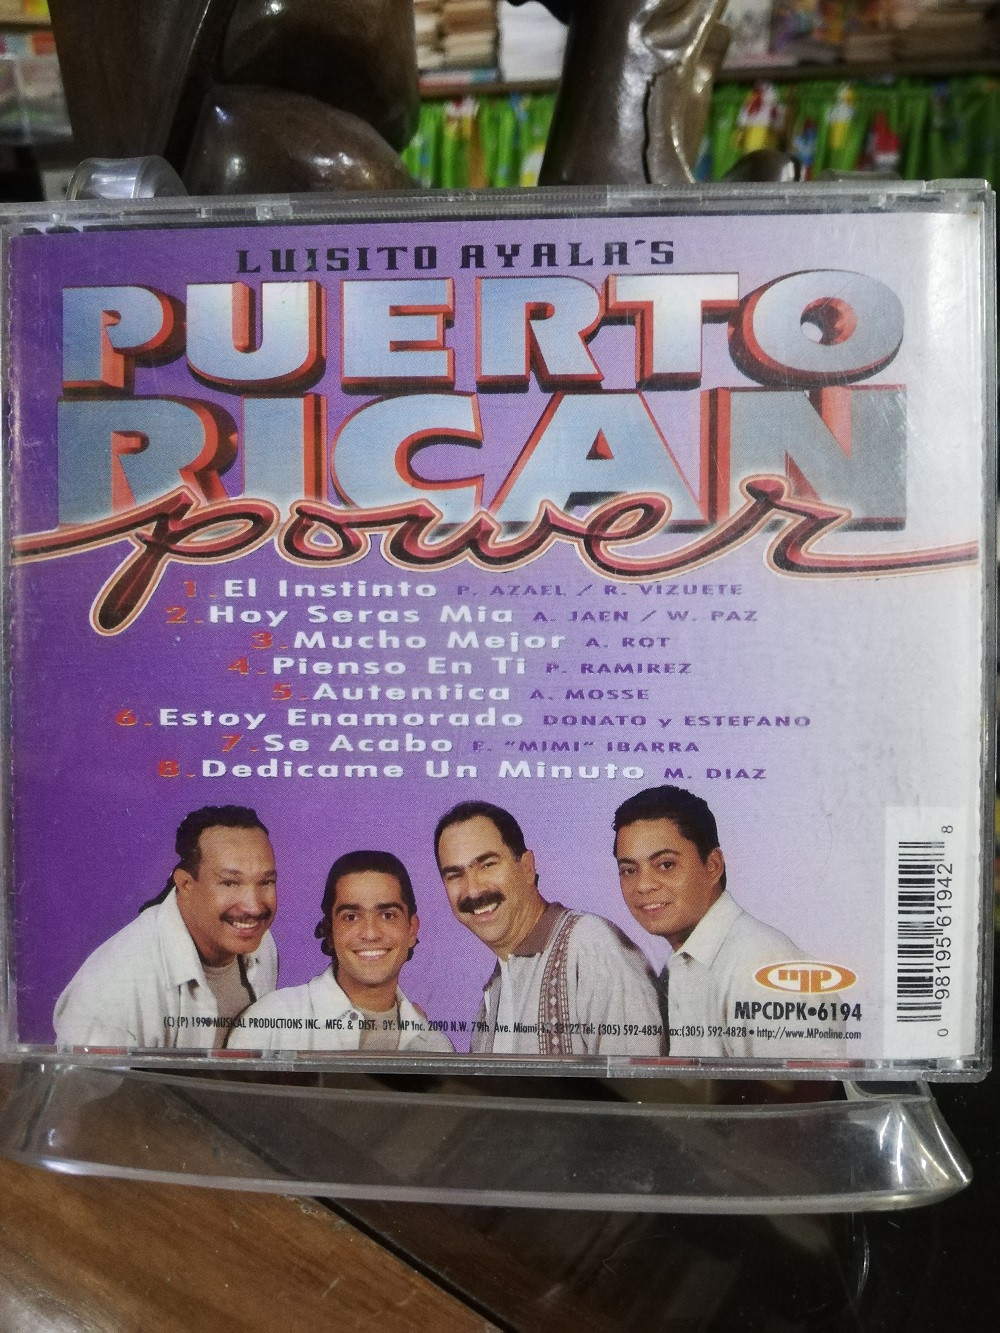 Imagen CD PUERTO RICAN POWER - PODEROSO PERO DIFERENTE 2